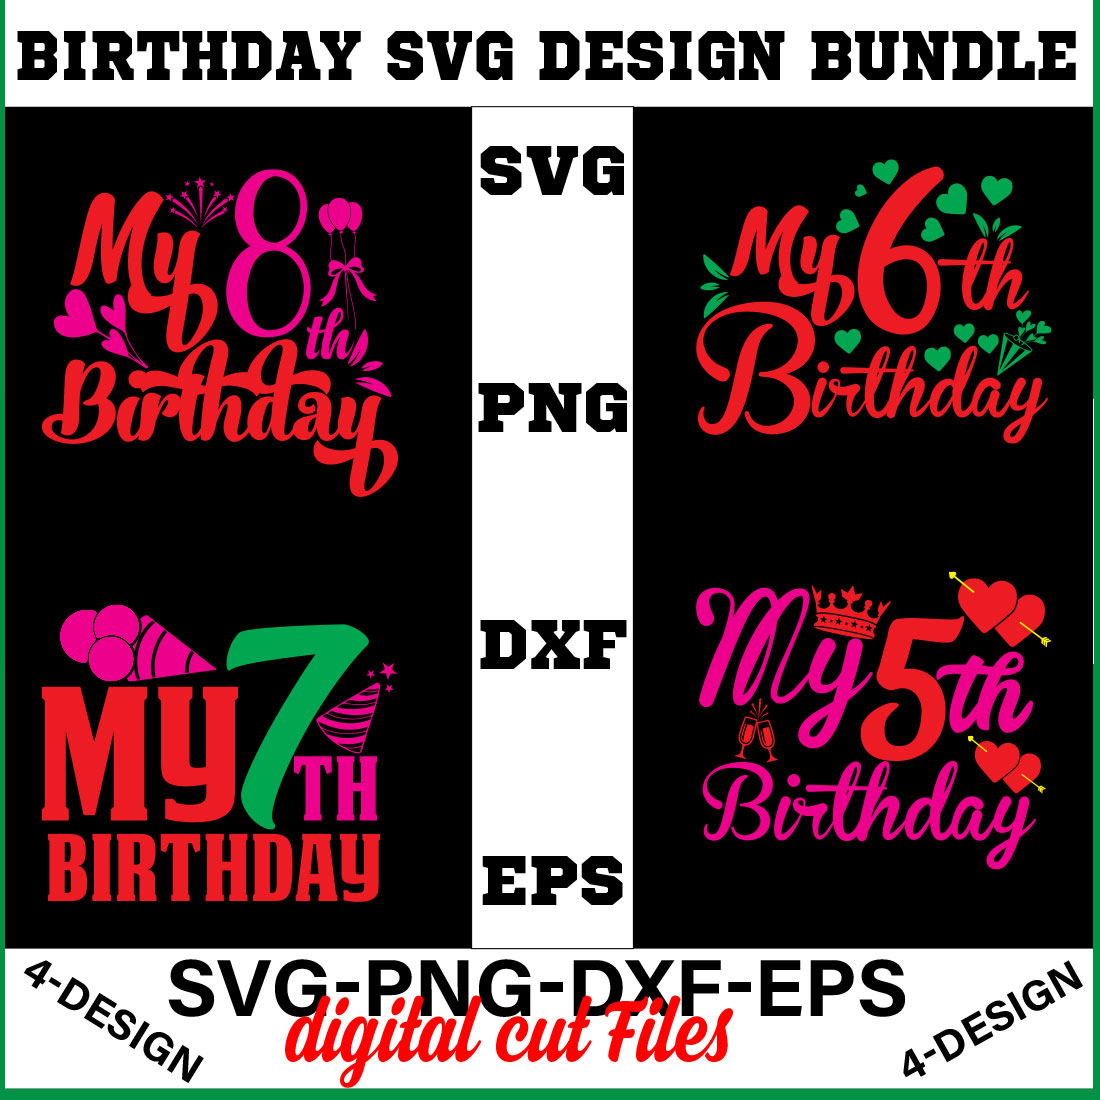 birthday svg design bundle Happy birthday svg bundle hand lettered birthday svg birthday party svg Volume-02 cover image.